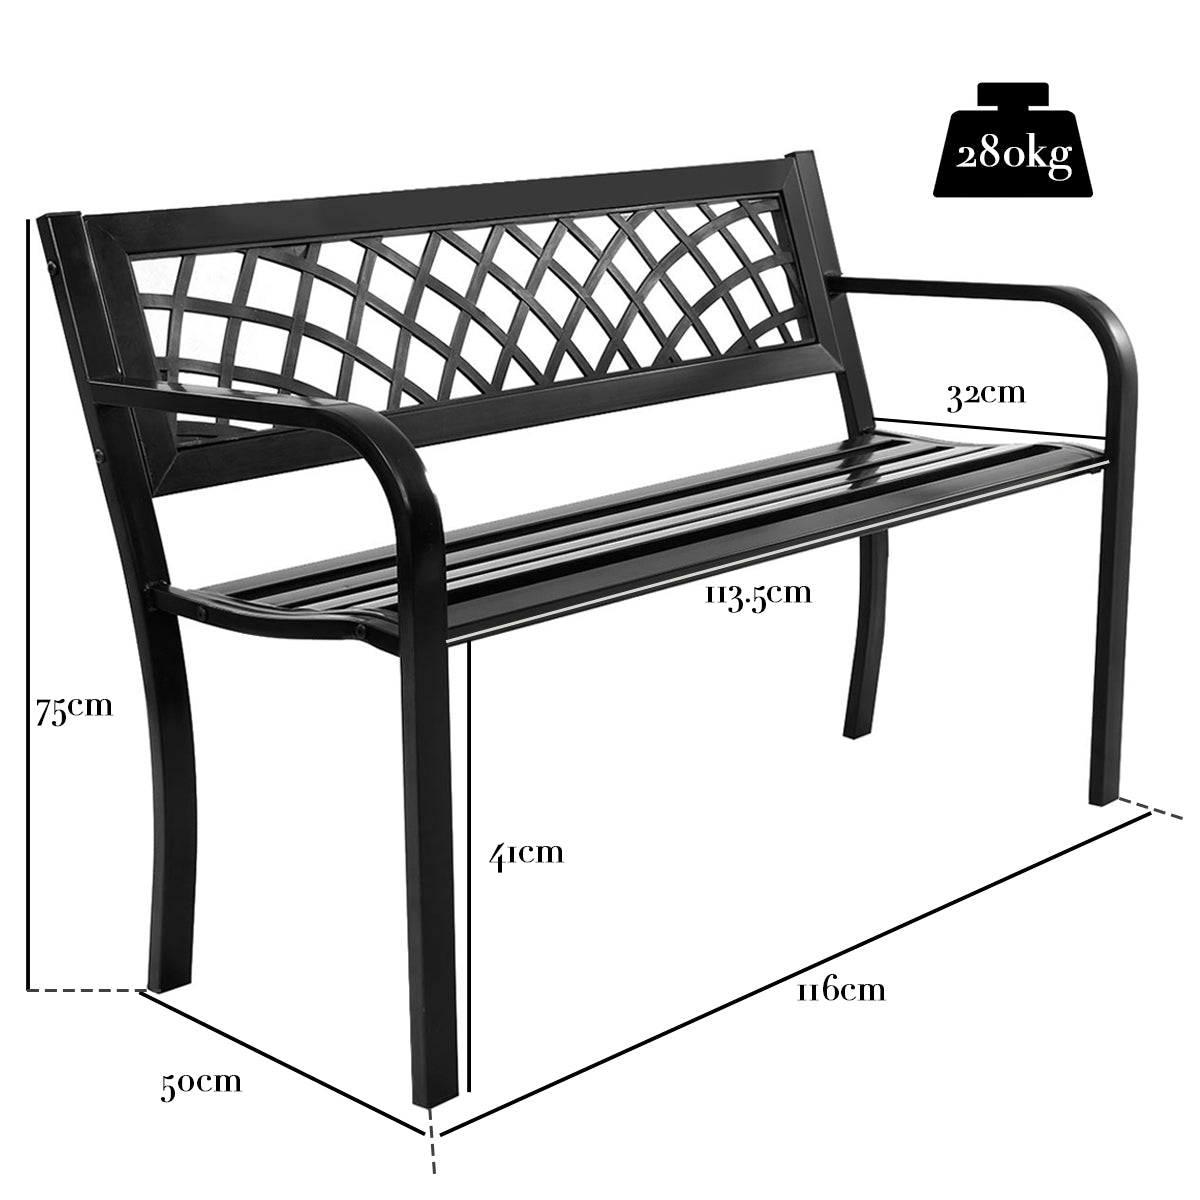 Giantex Patio Garden Bench Loveseats Park Yard Furniture Decor Cast Iron Frame Black (Black Steel W/ PVC Mesh Pattern)